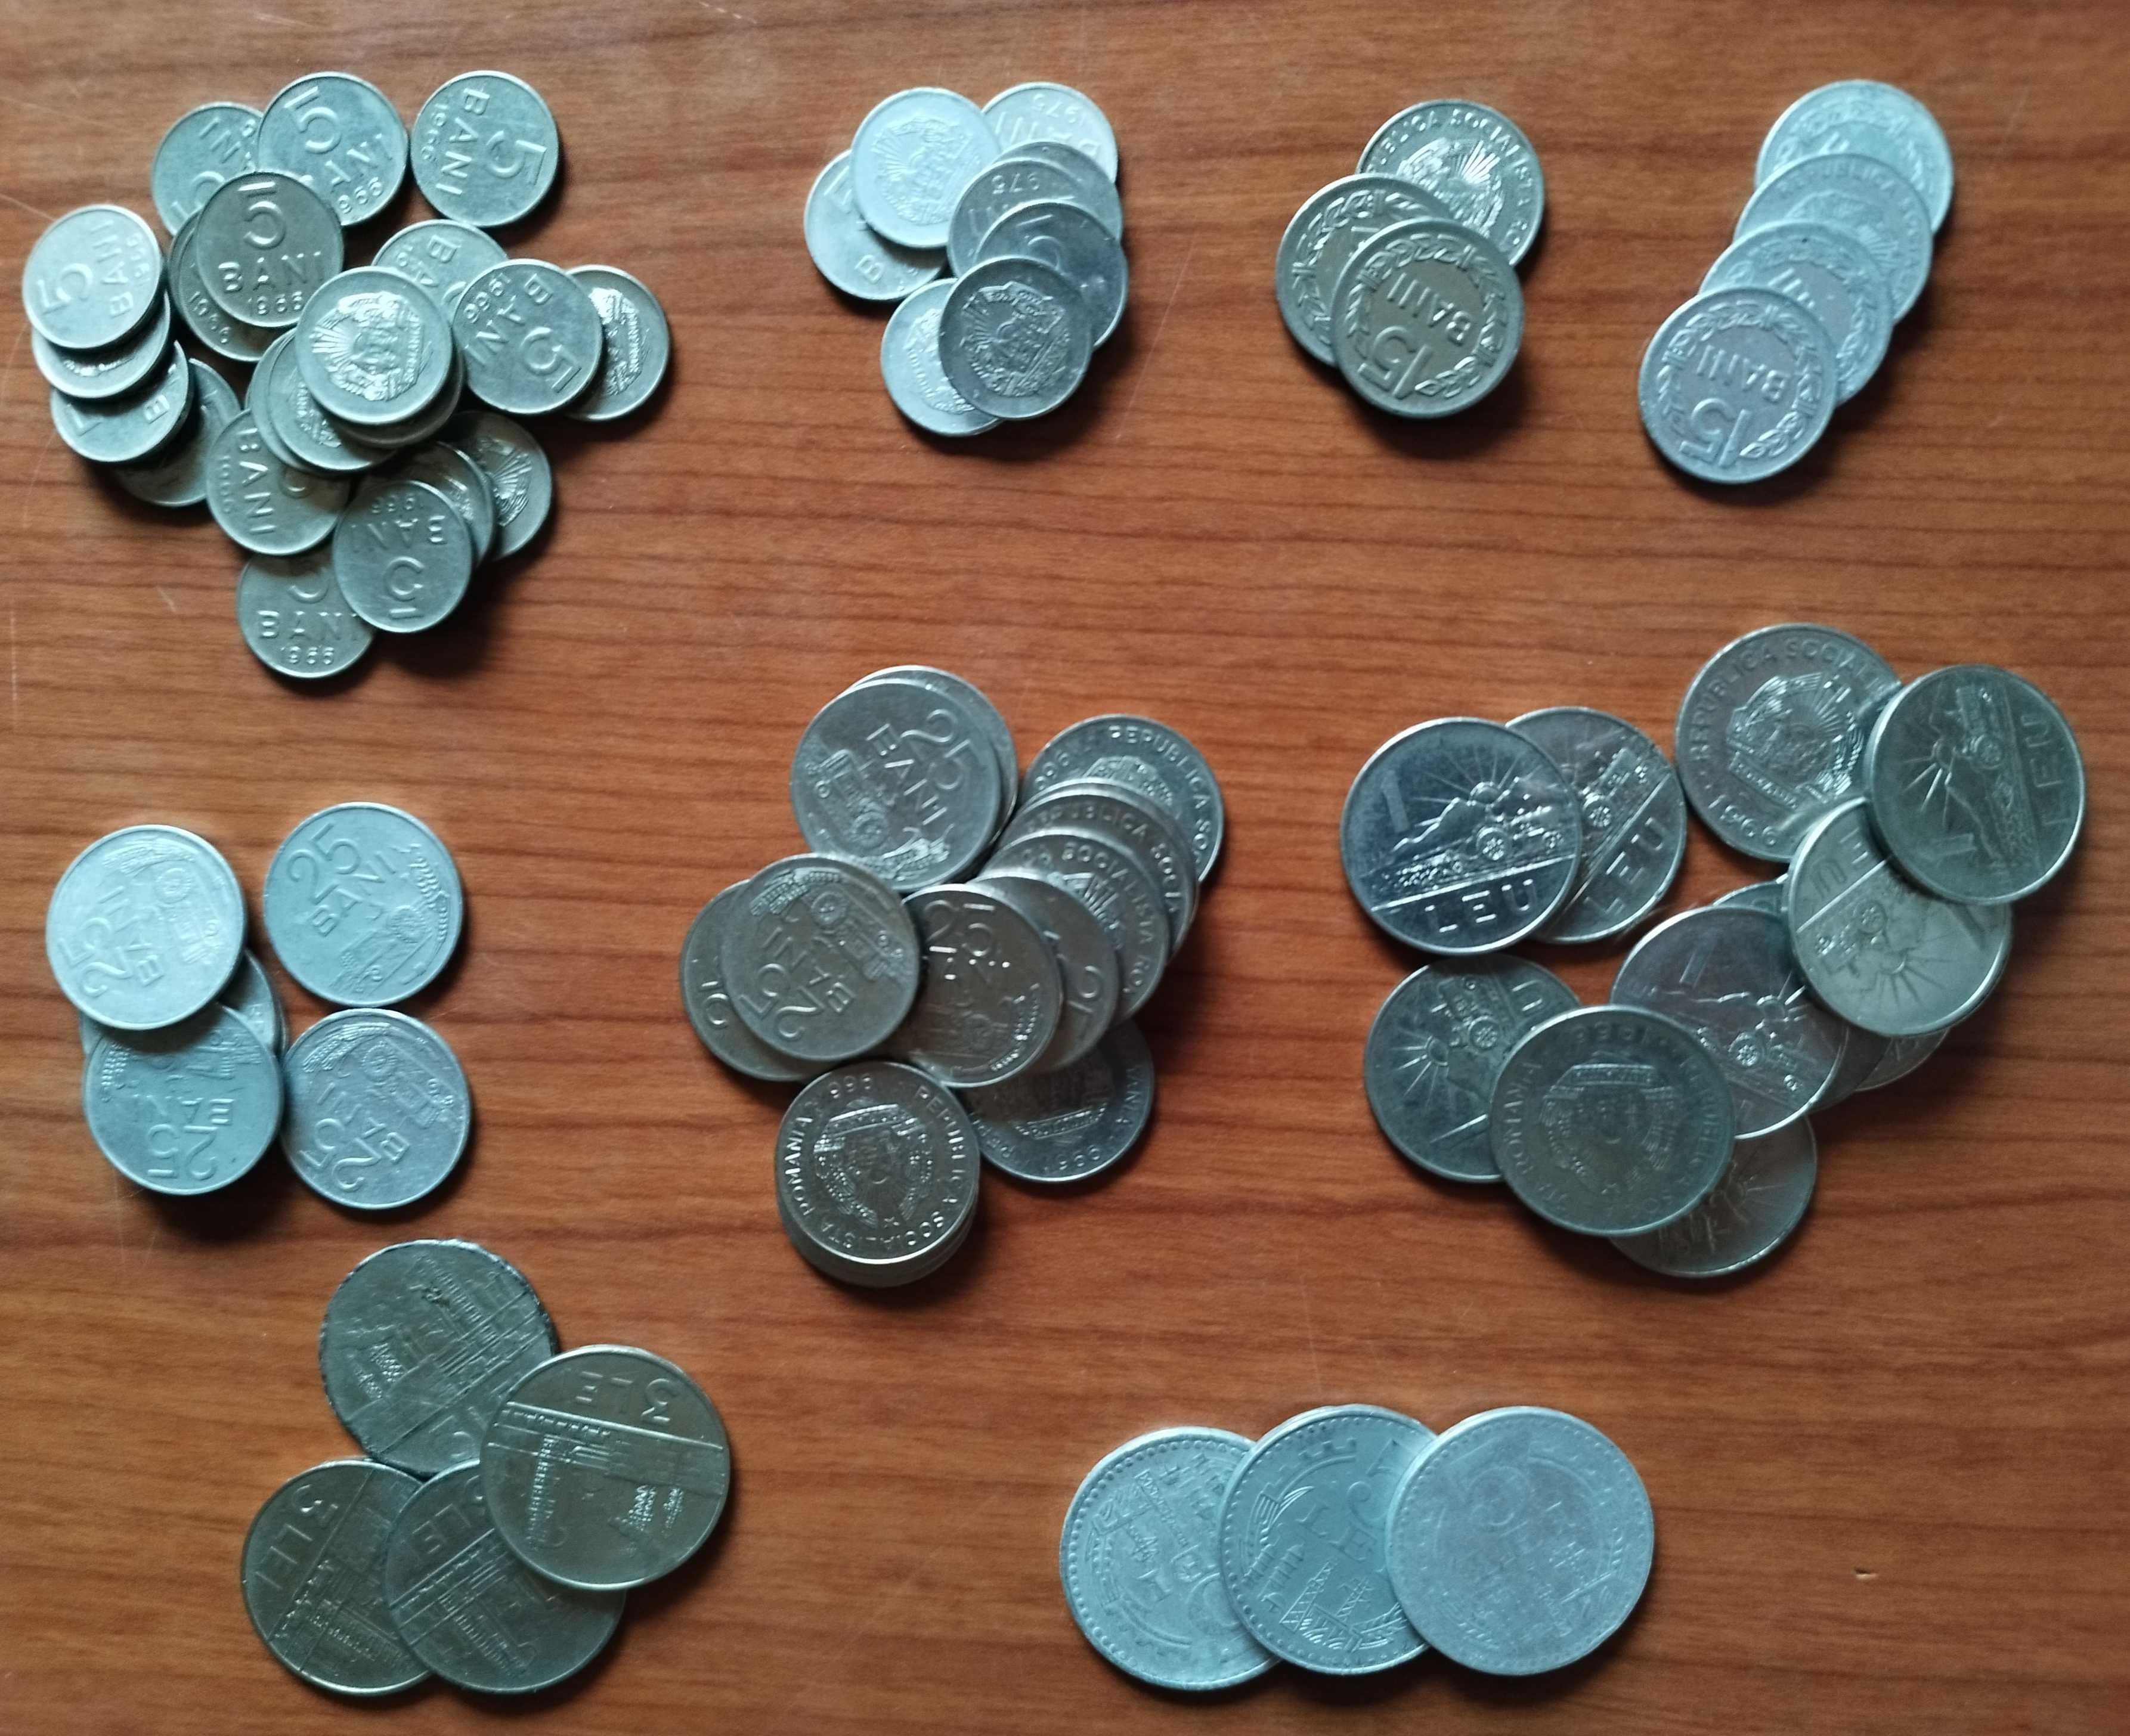 Monede românești , bancnote românești